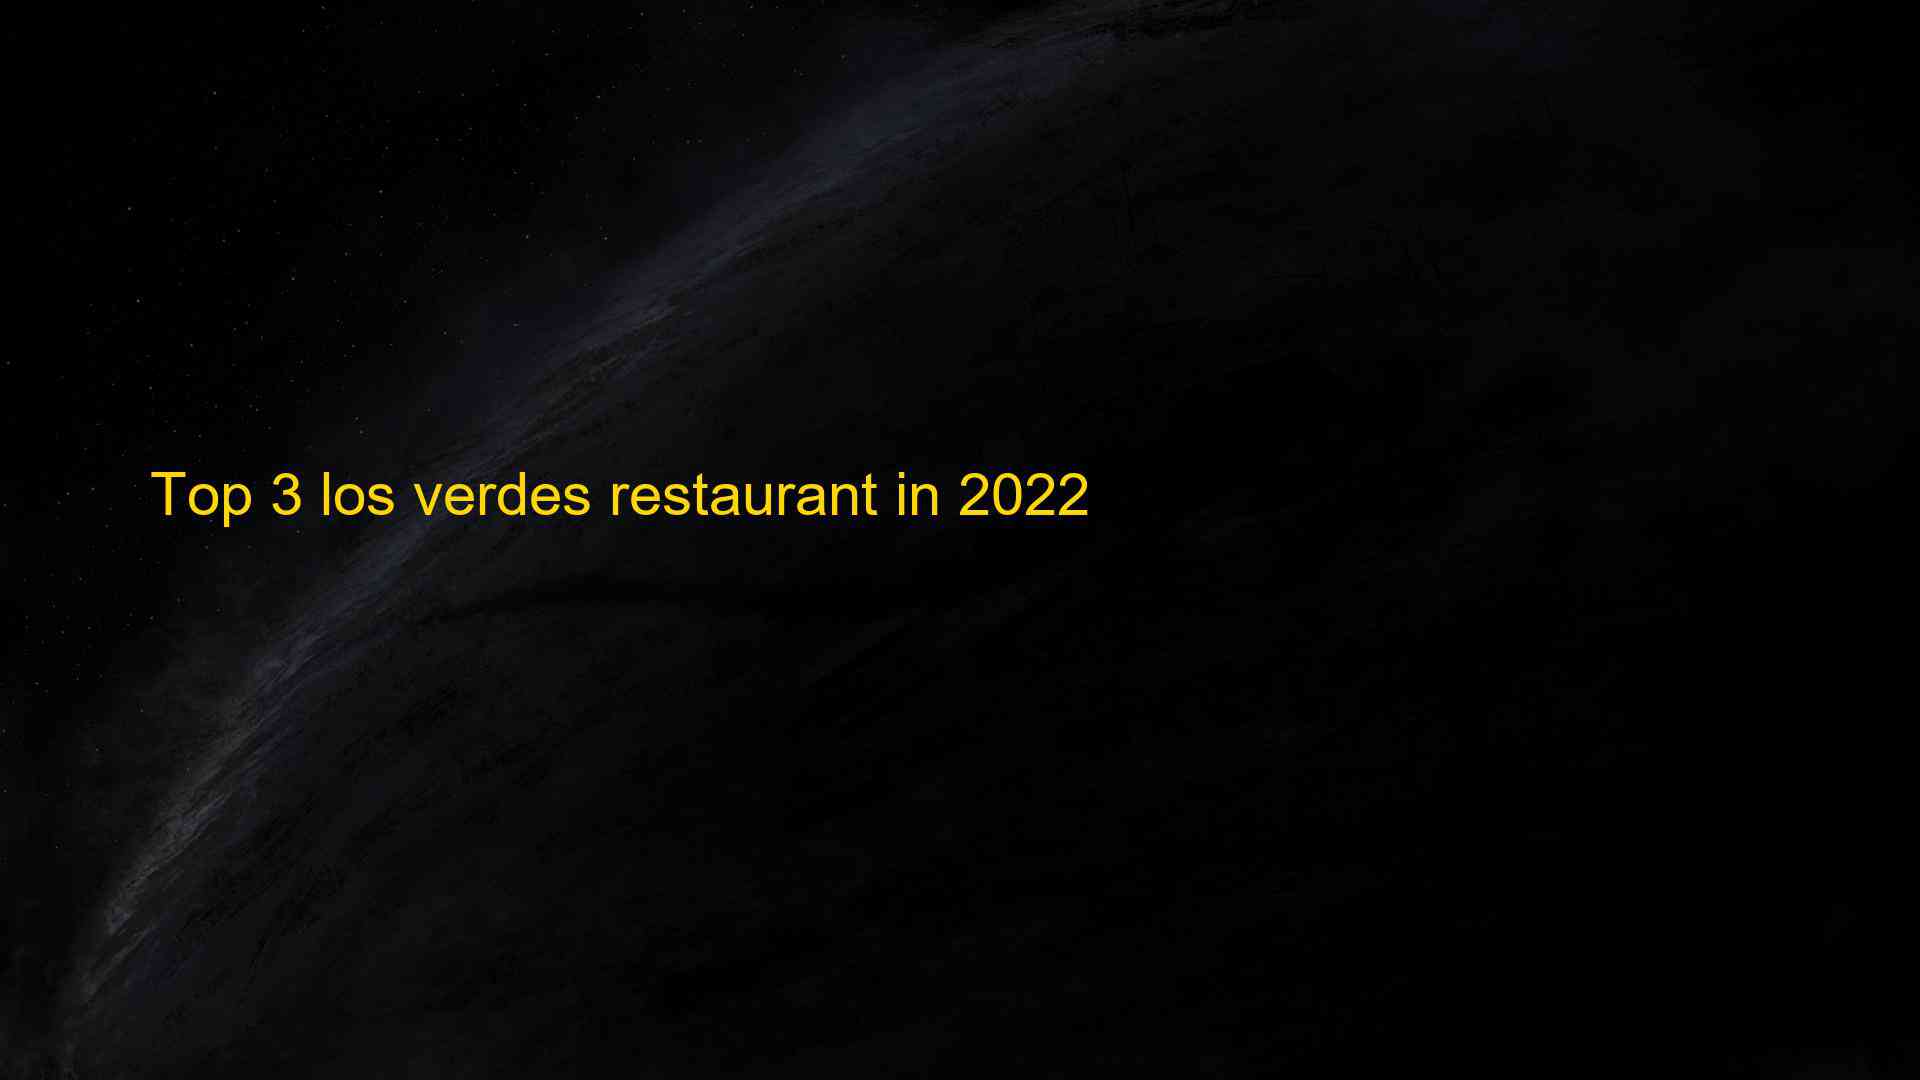 Top 3 los verdes restaurant in 2022 1663551637